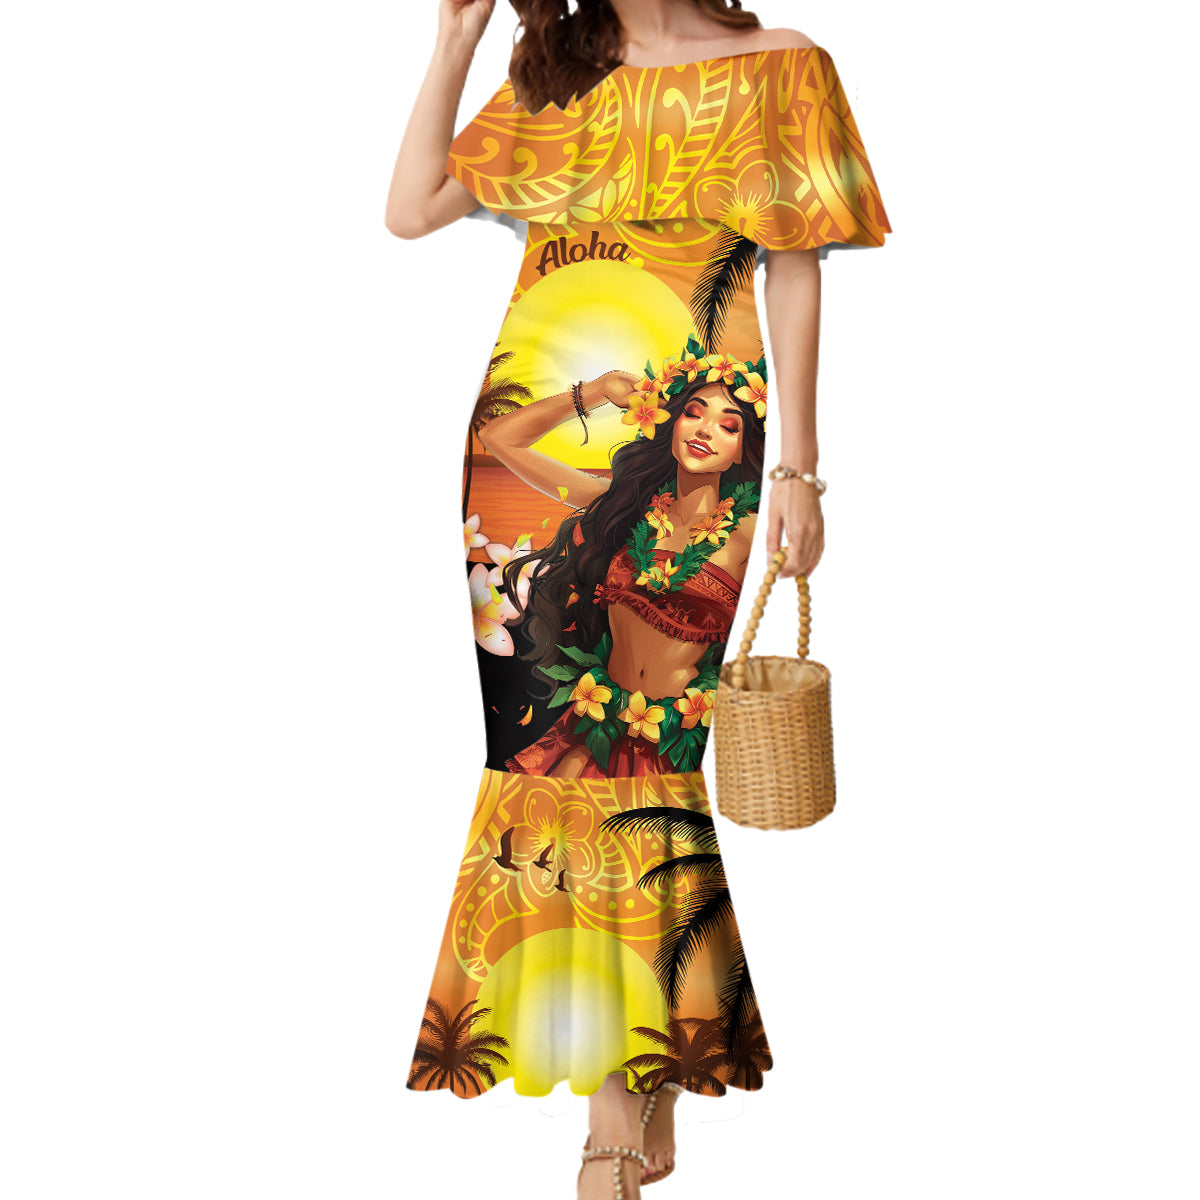 Aloha Hawaii Women's Day Mermaid Dress Hula Girl With Sunset Vibes LT14 Women Yellow - Polynesian Pride